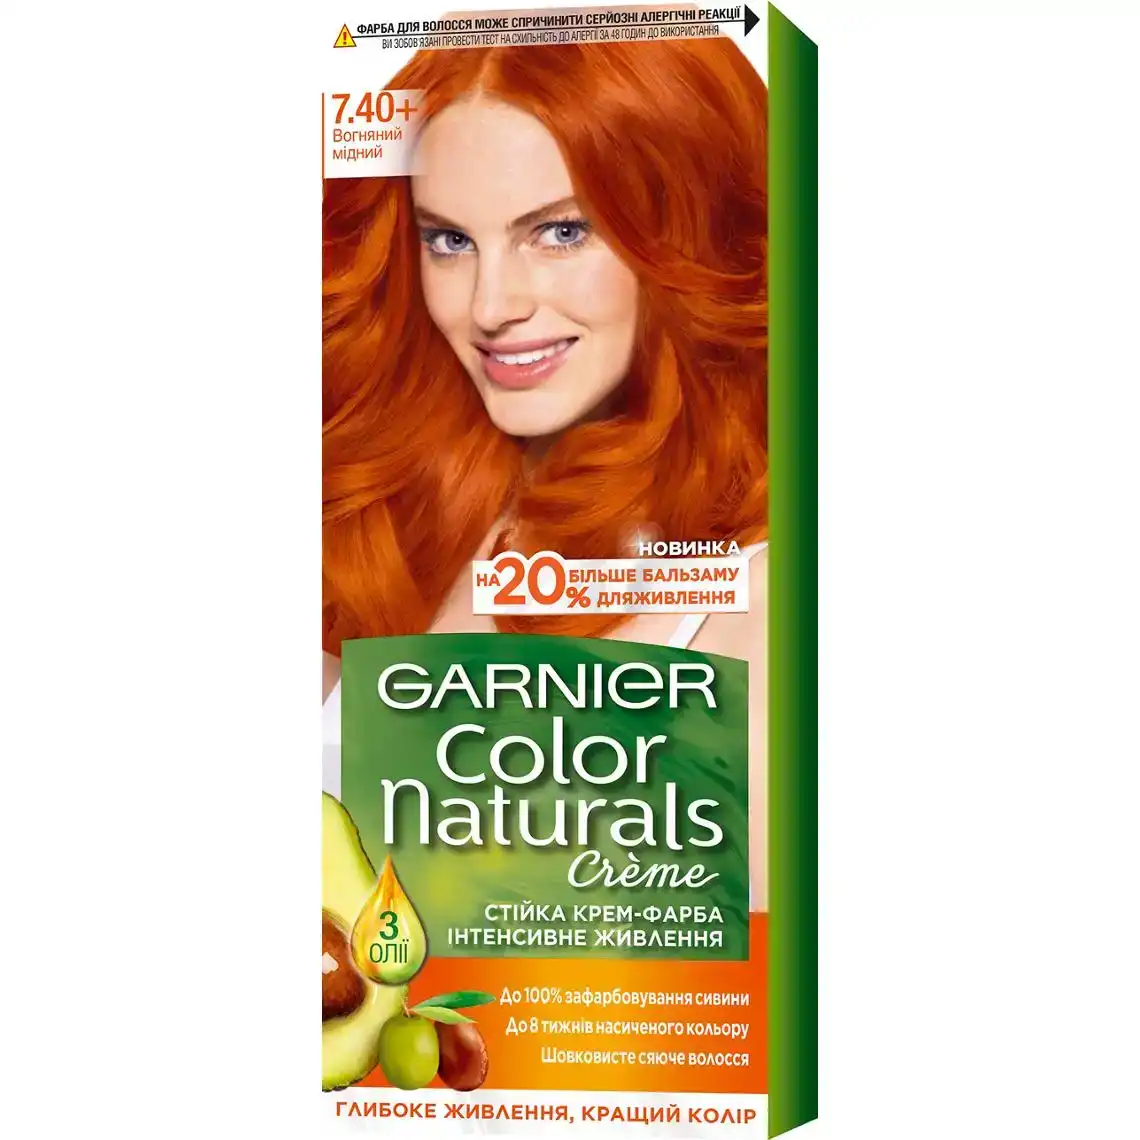 Крем-фарба для волосся Garnier Color Naturals 7.4 вогненний мідний